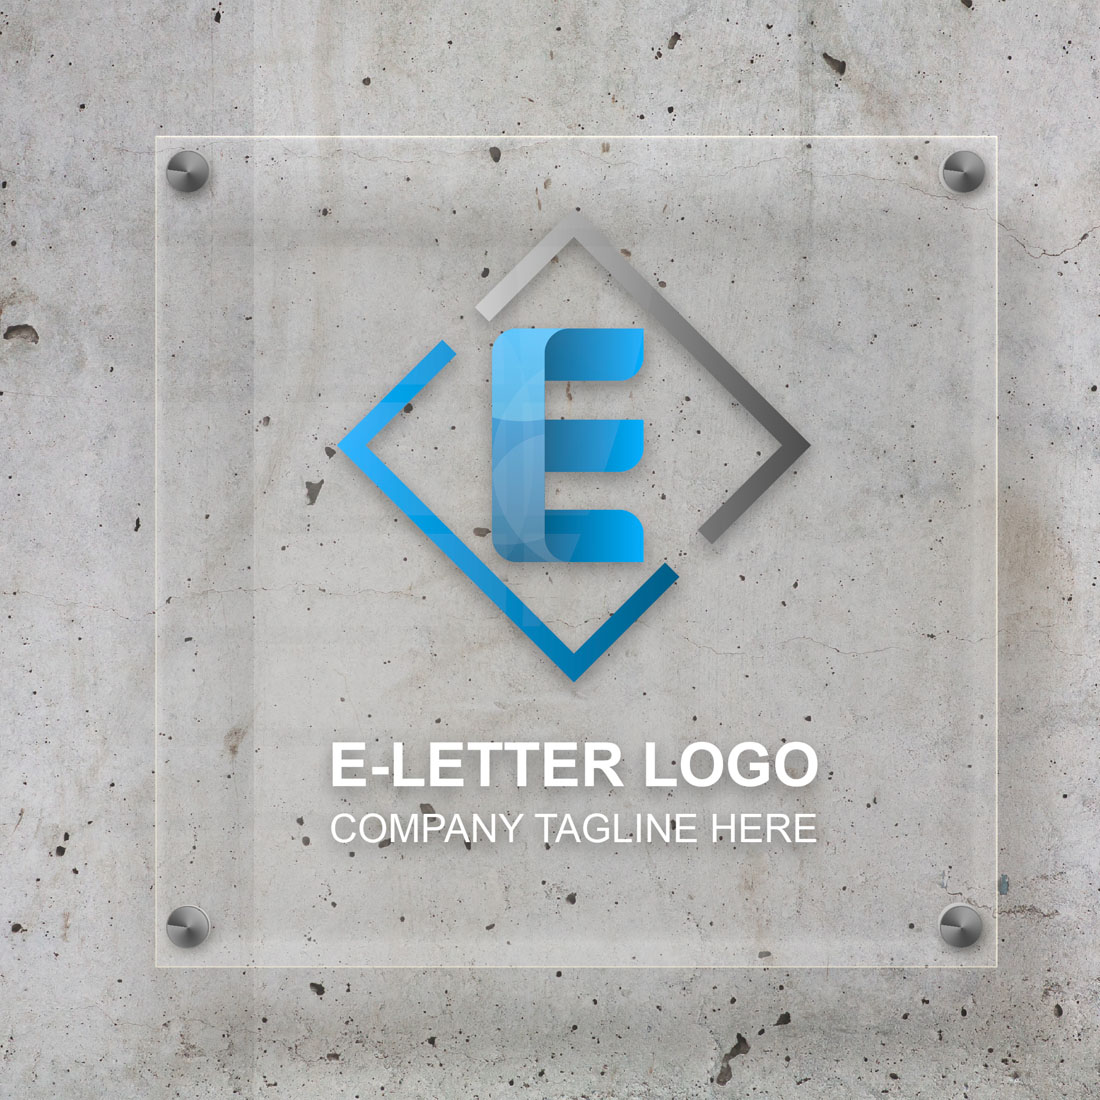 E Letter Logo with mockup.